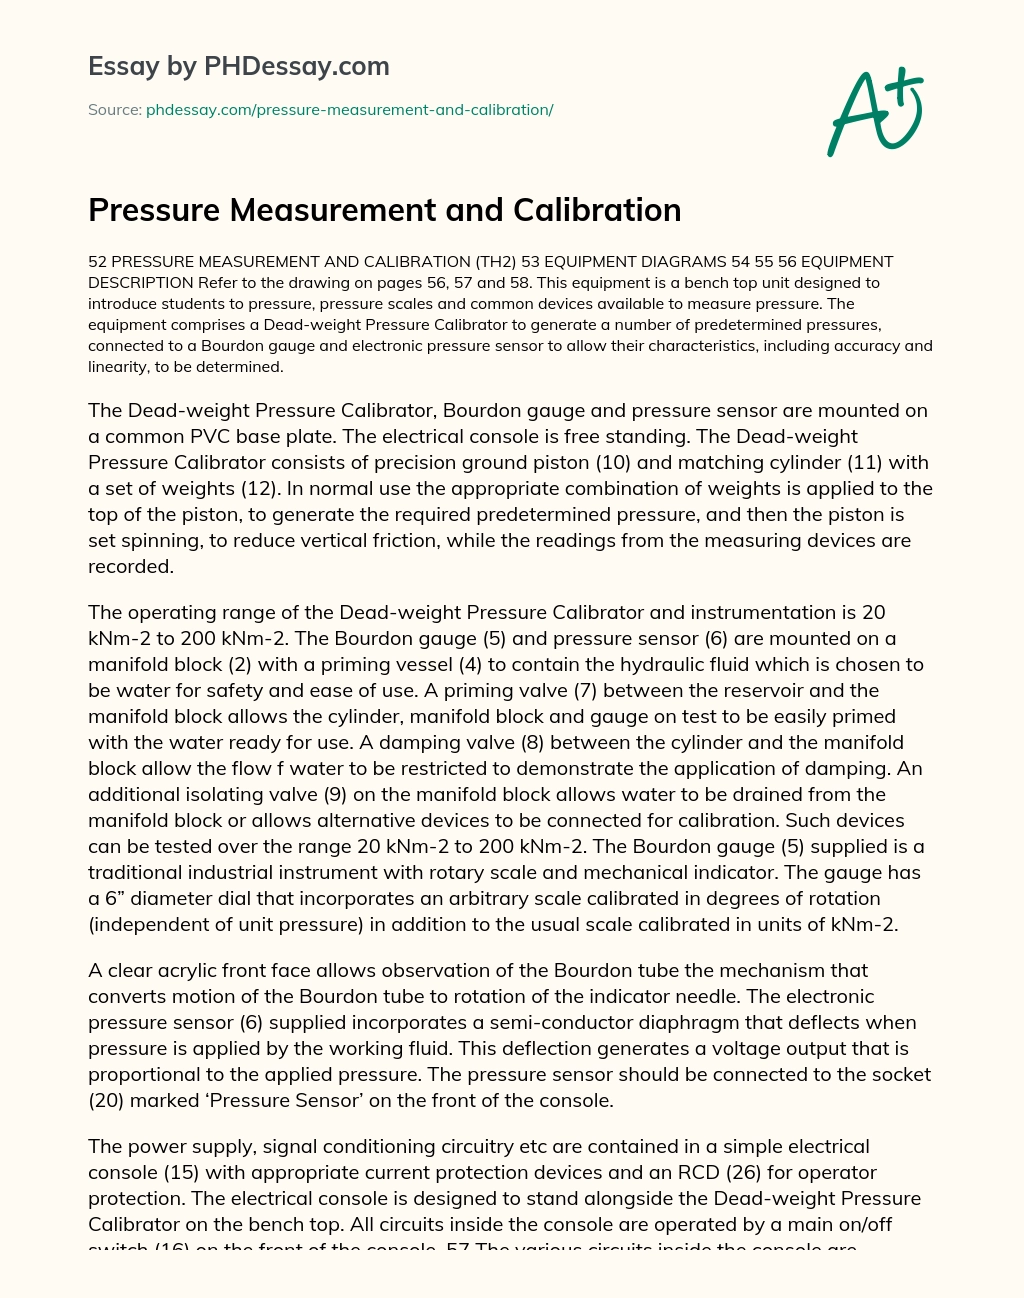 Pressure Measurement and Calibration essay